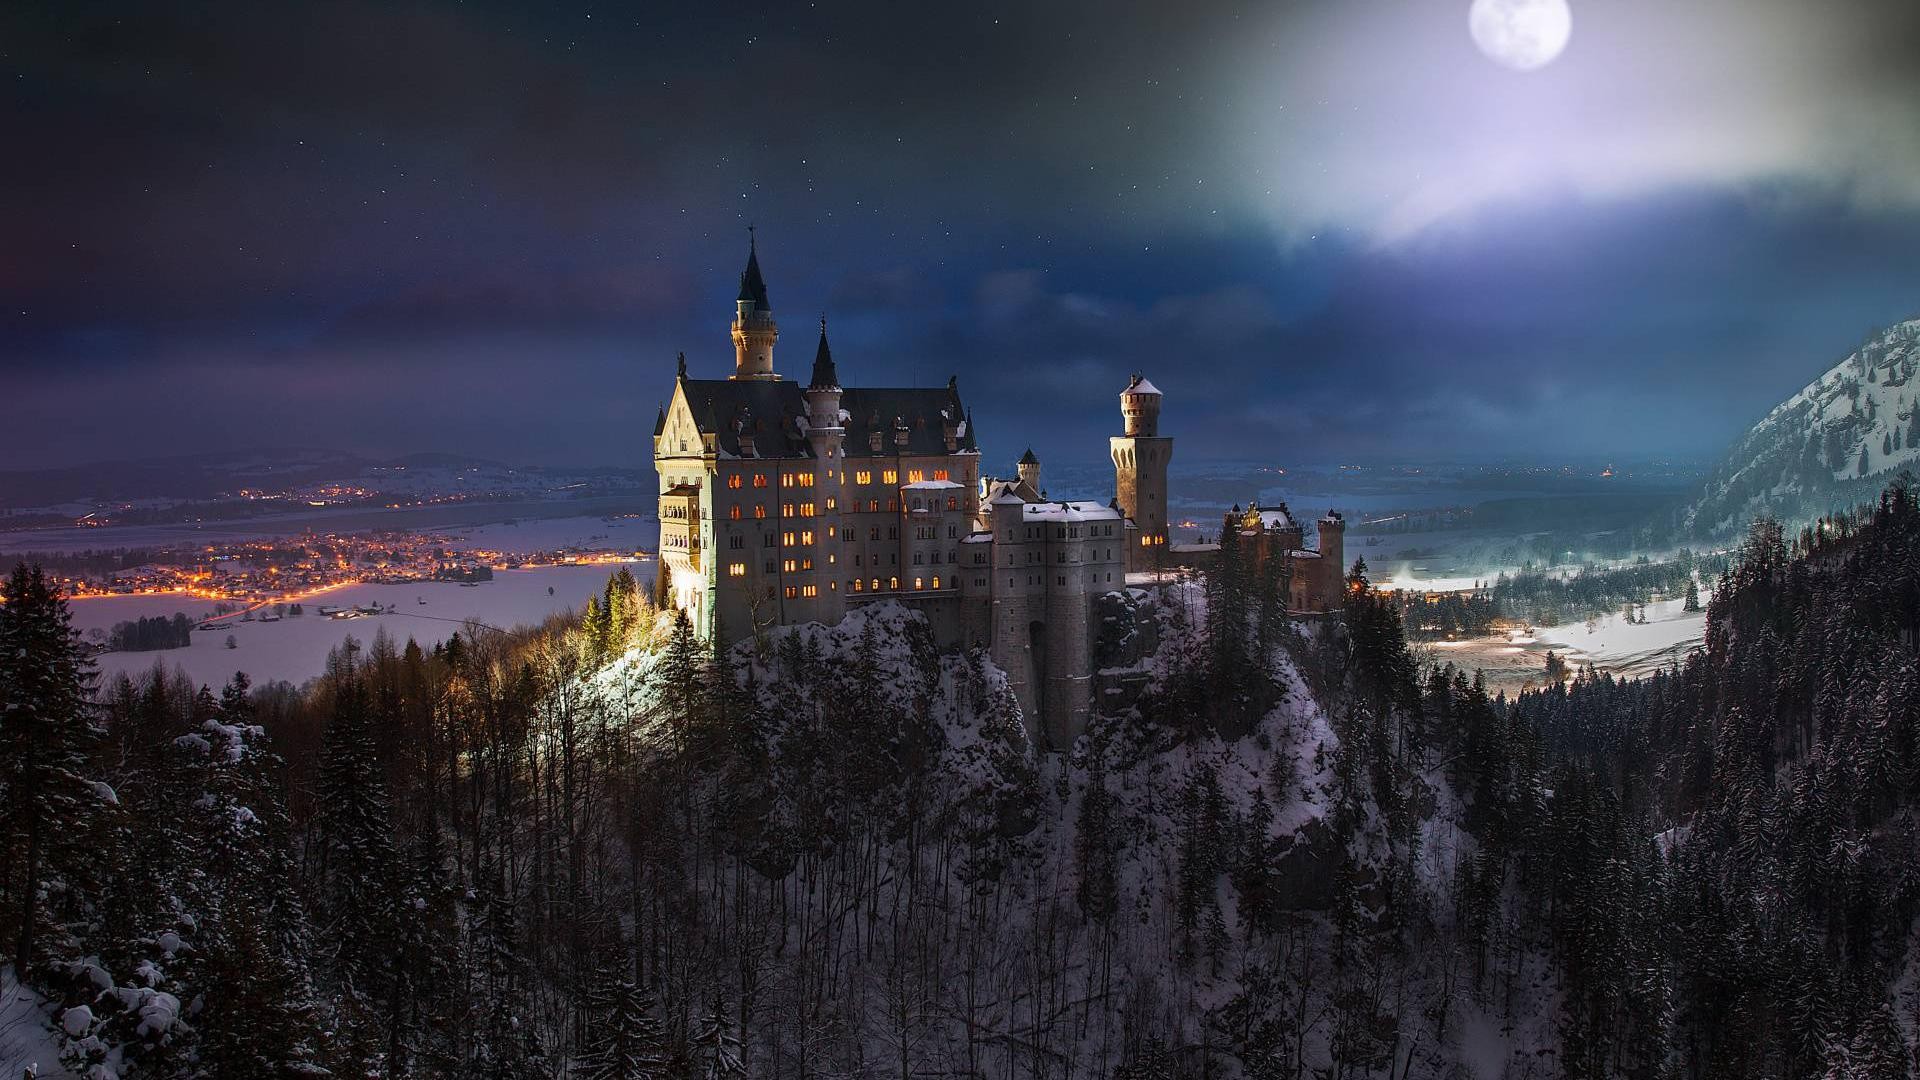 General 1920x1080 Neuschwanstein Castle castle Germany night Moon landscape snow forest trees Bavaria